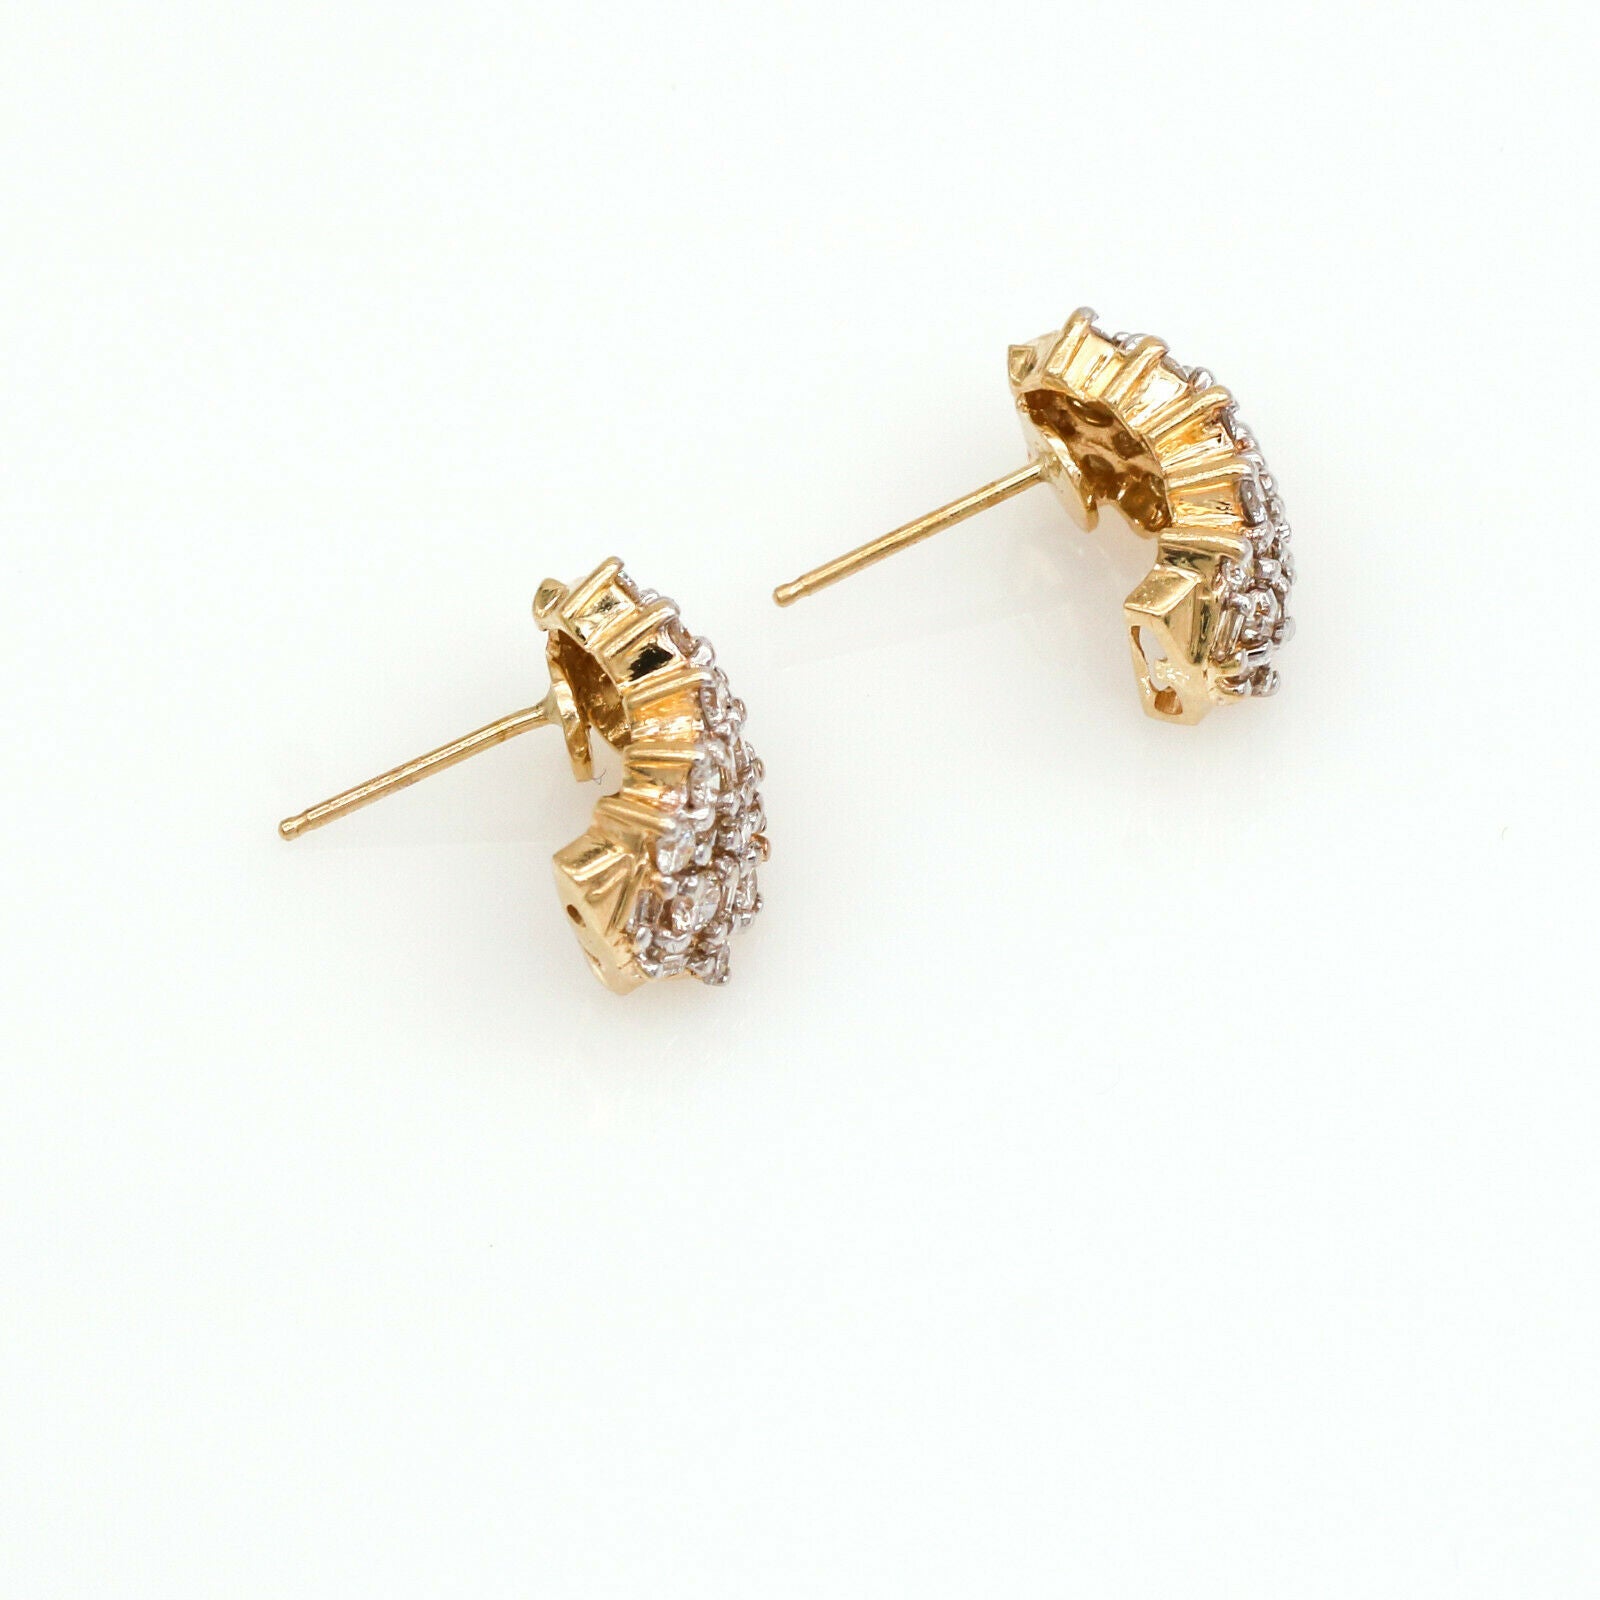 1.40 ct Diamond Half Hoop Earrings in 14k Yellow Gold